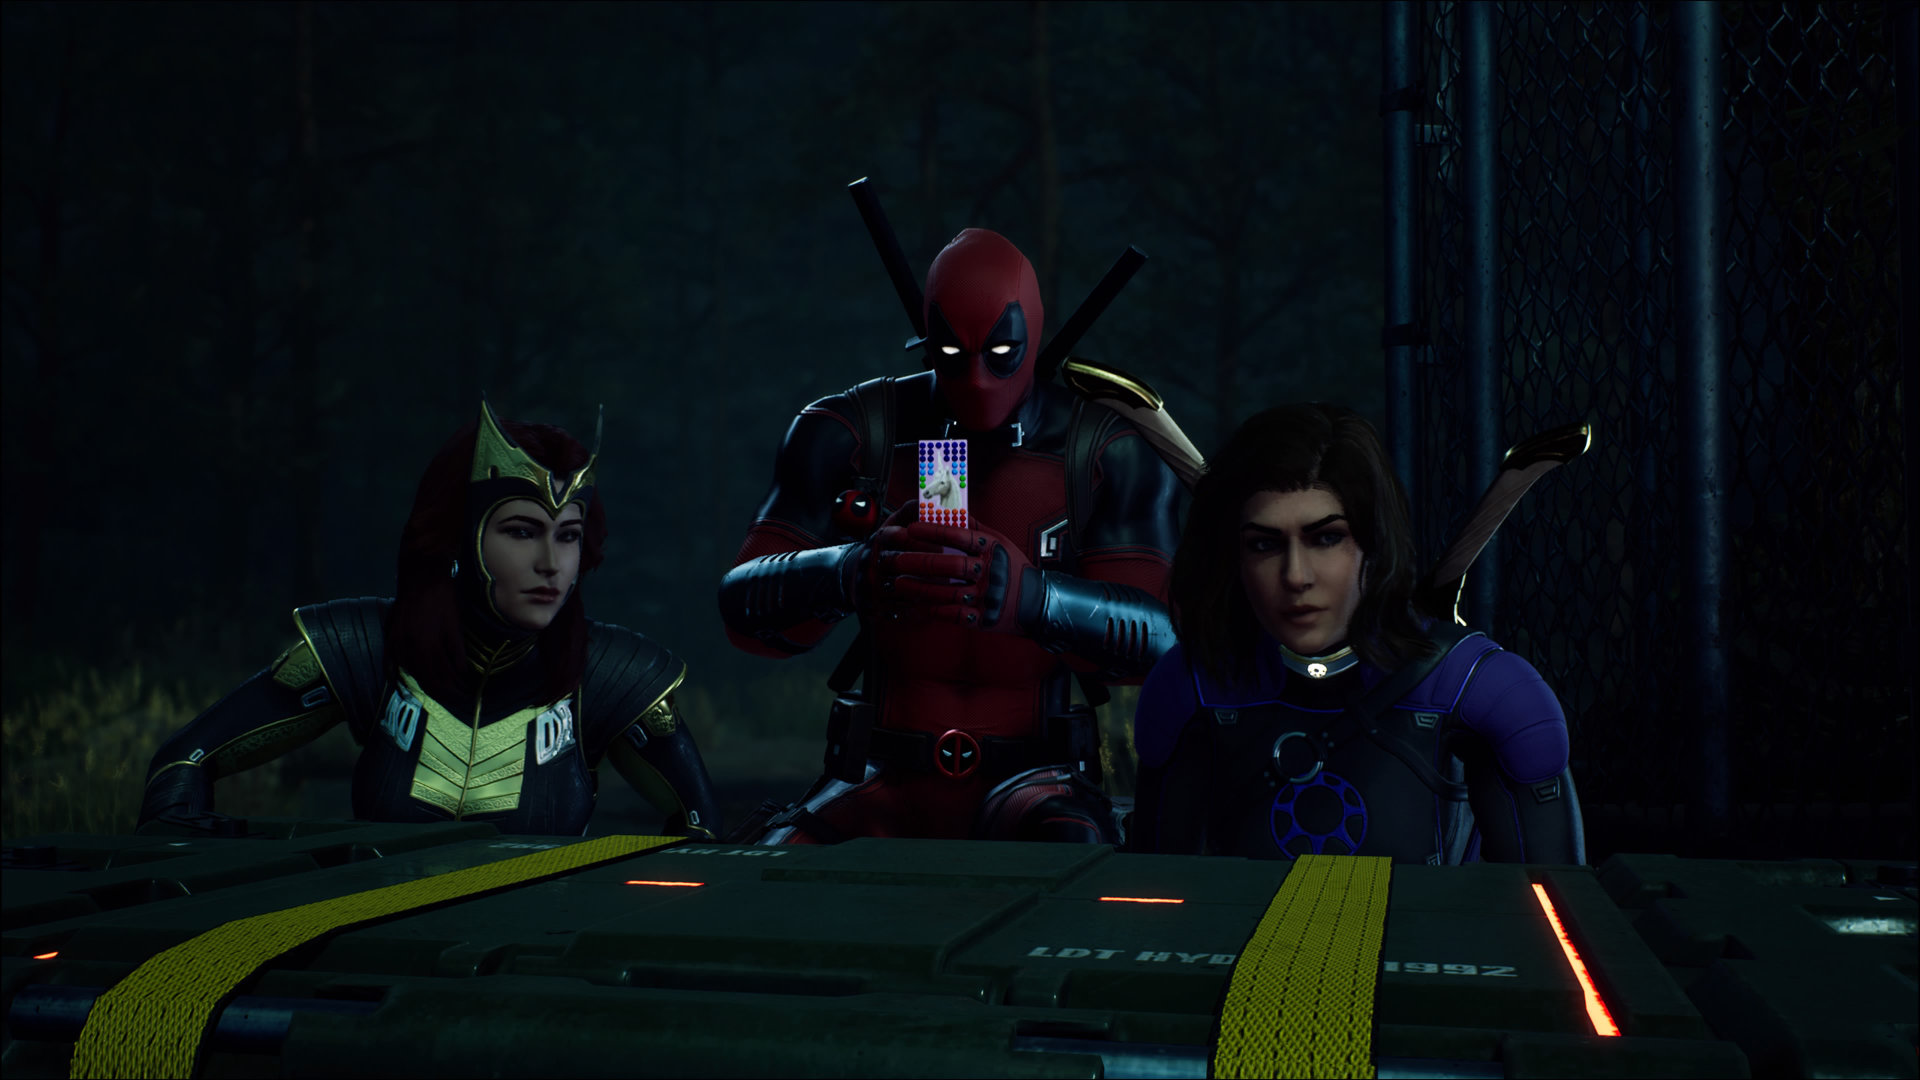 Marvel's Midnight Suns gameplay reveal trailers, screenshots - Gematsu